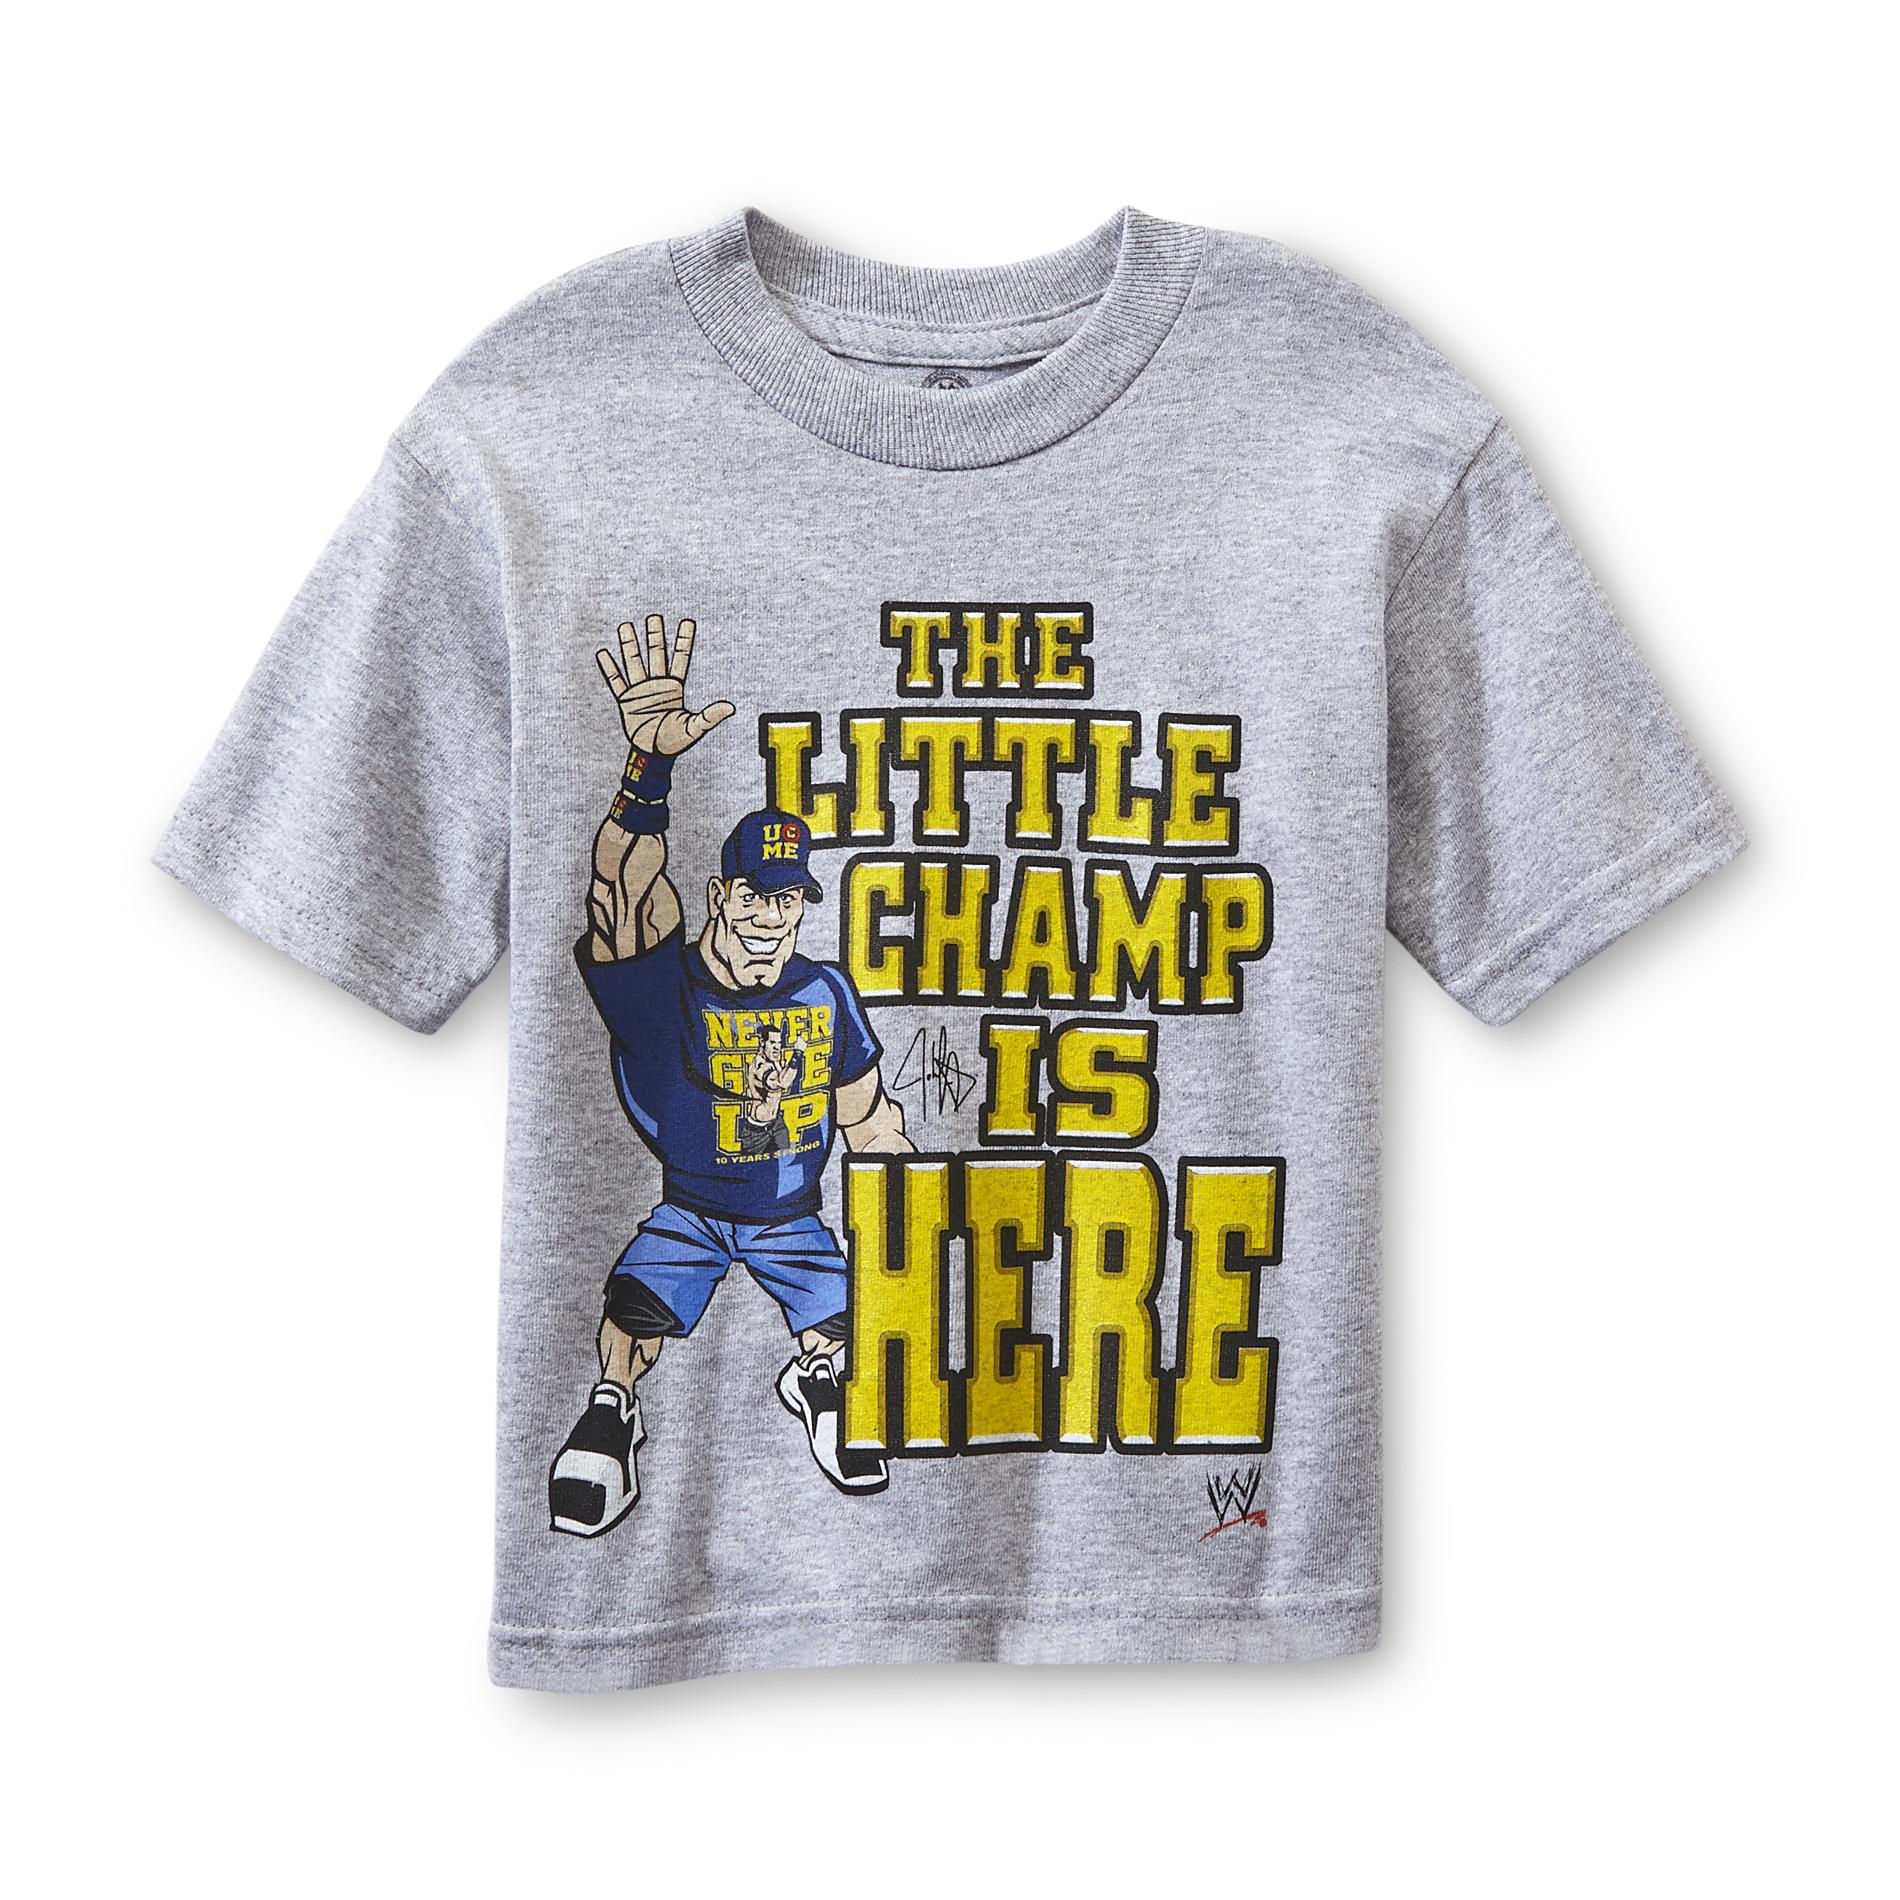 John Cena Toddler Boy's Graphic T-Shirt - Little Champ